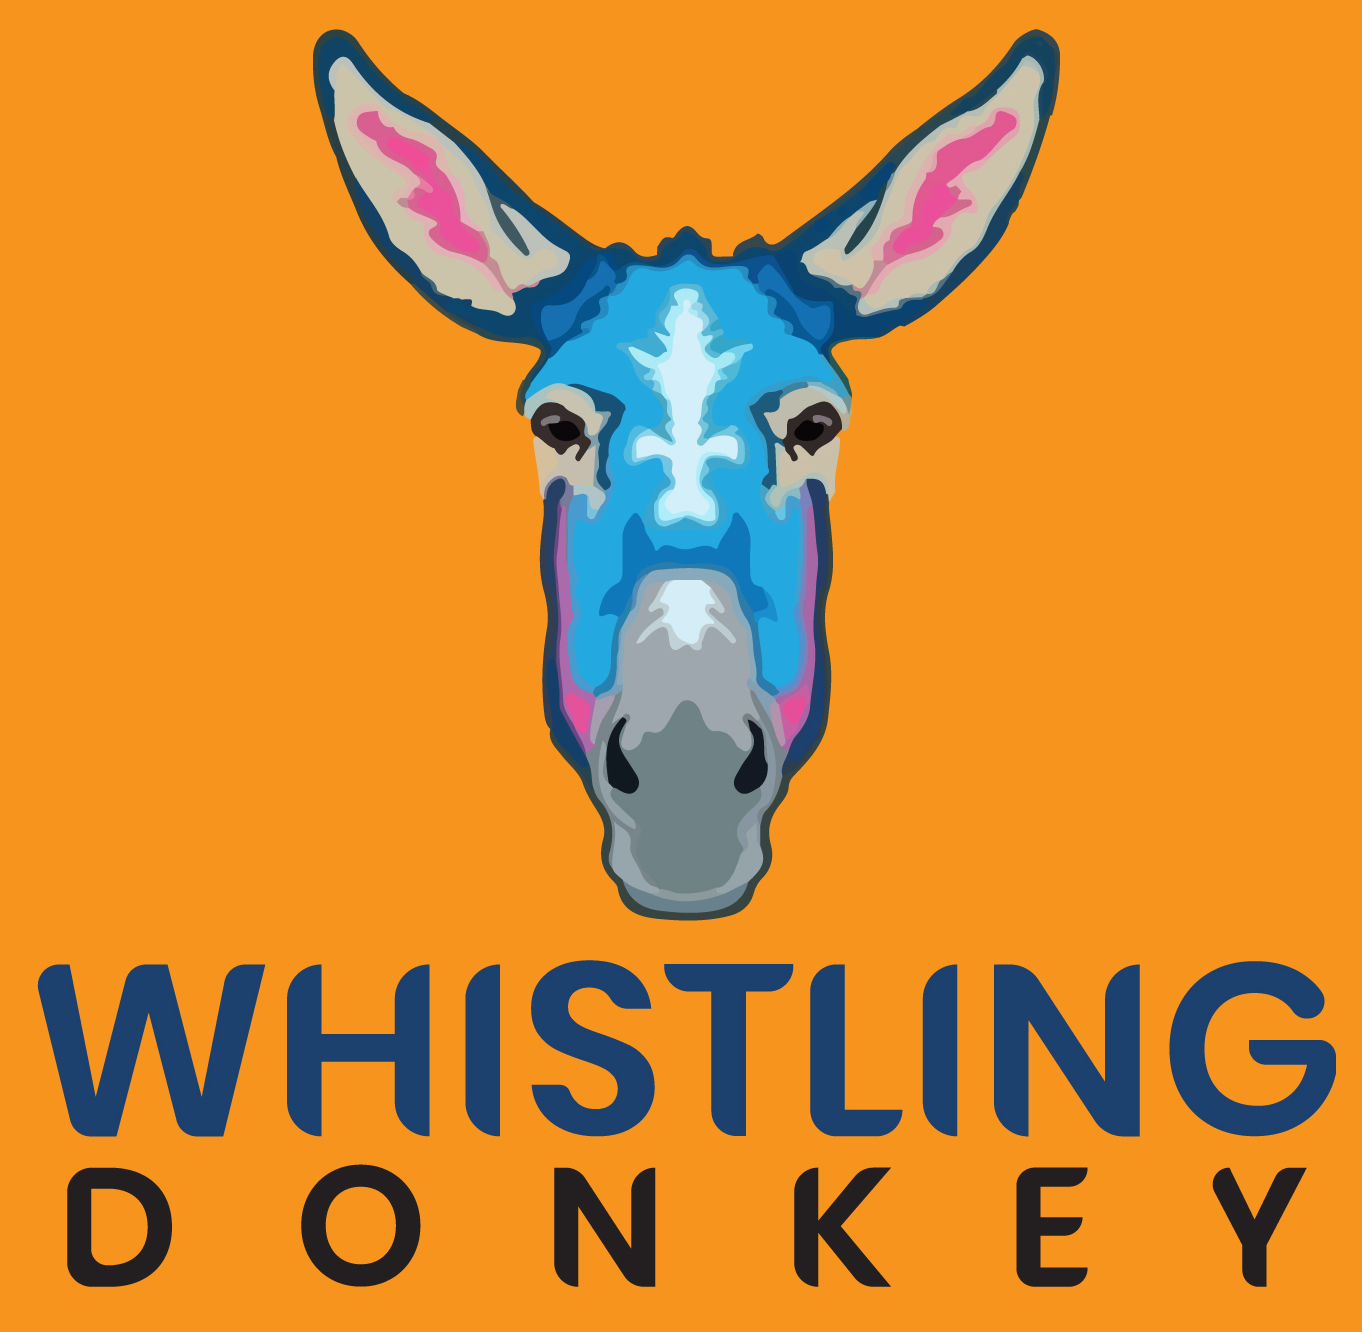 The Whistling Donkey